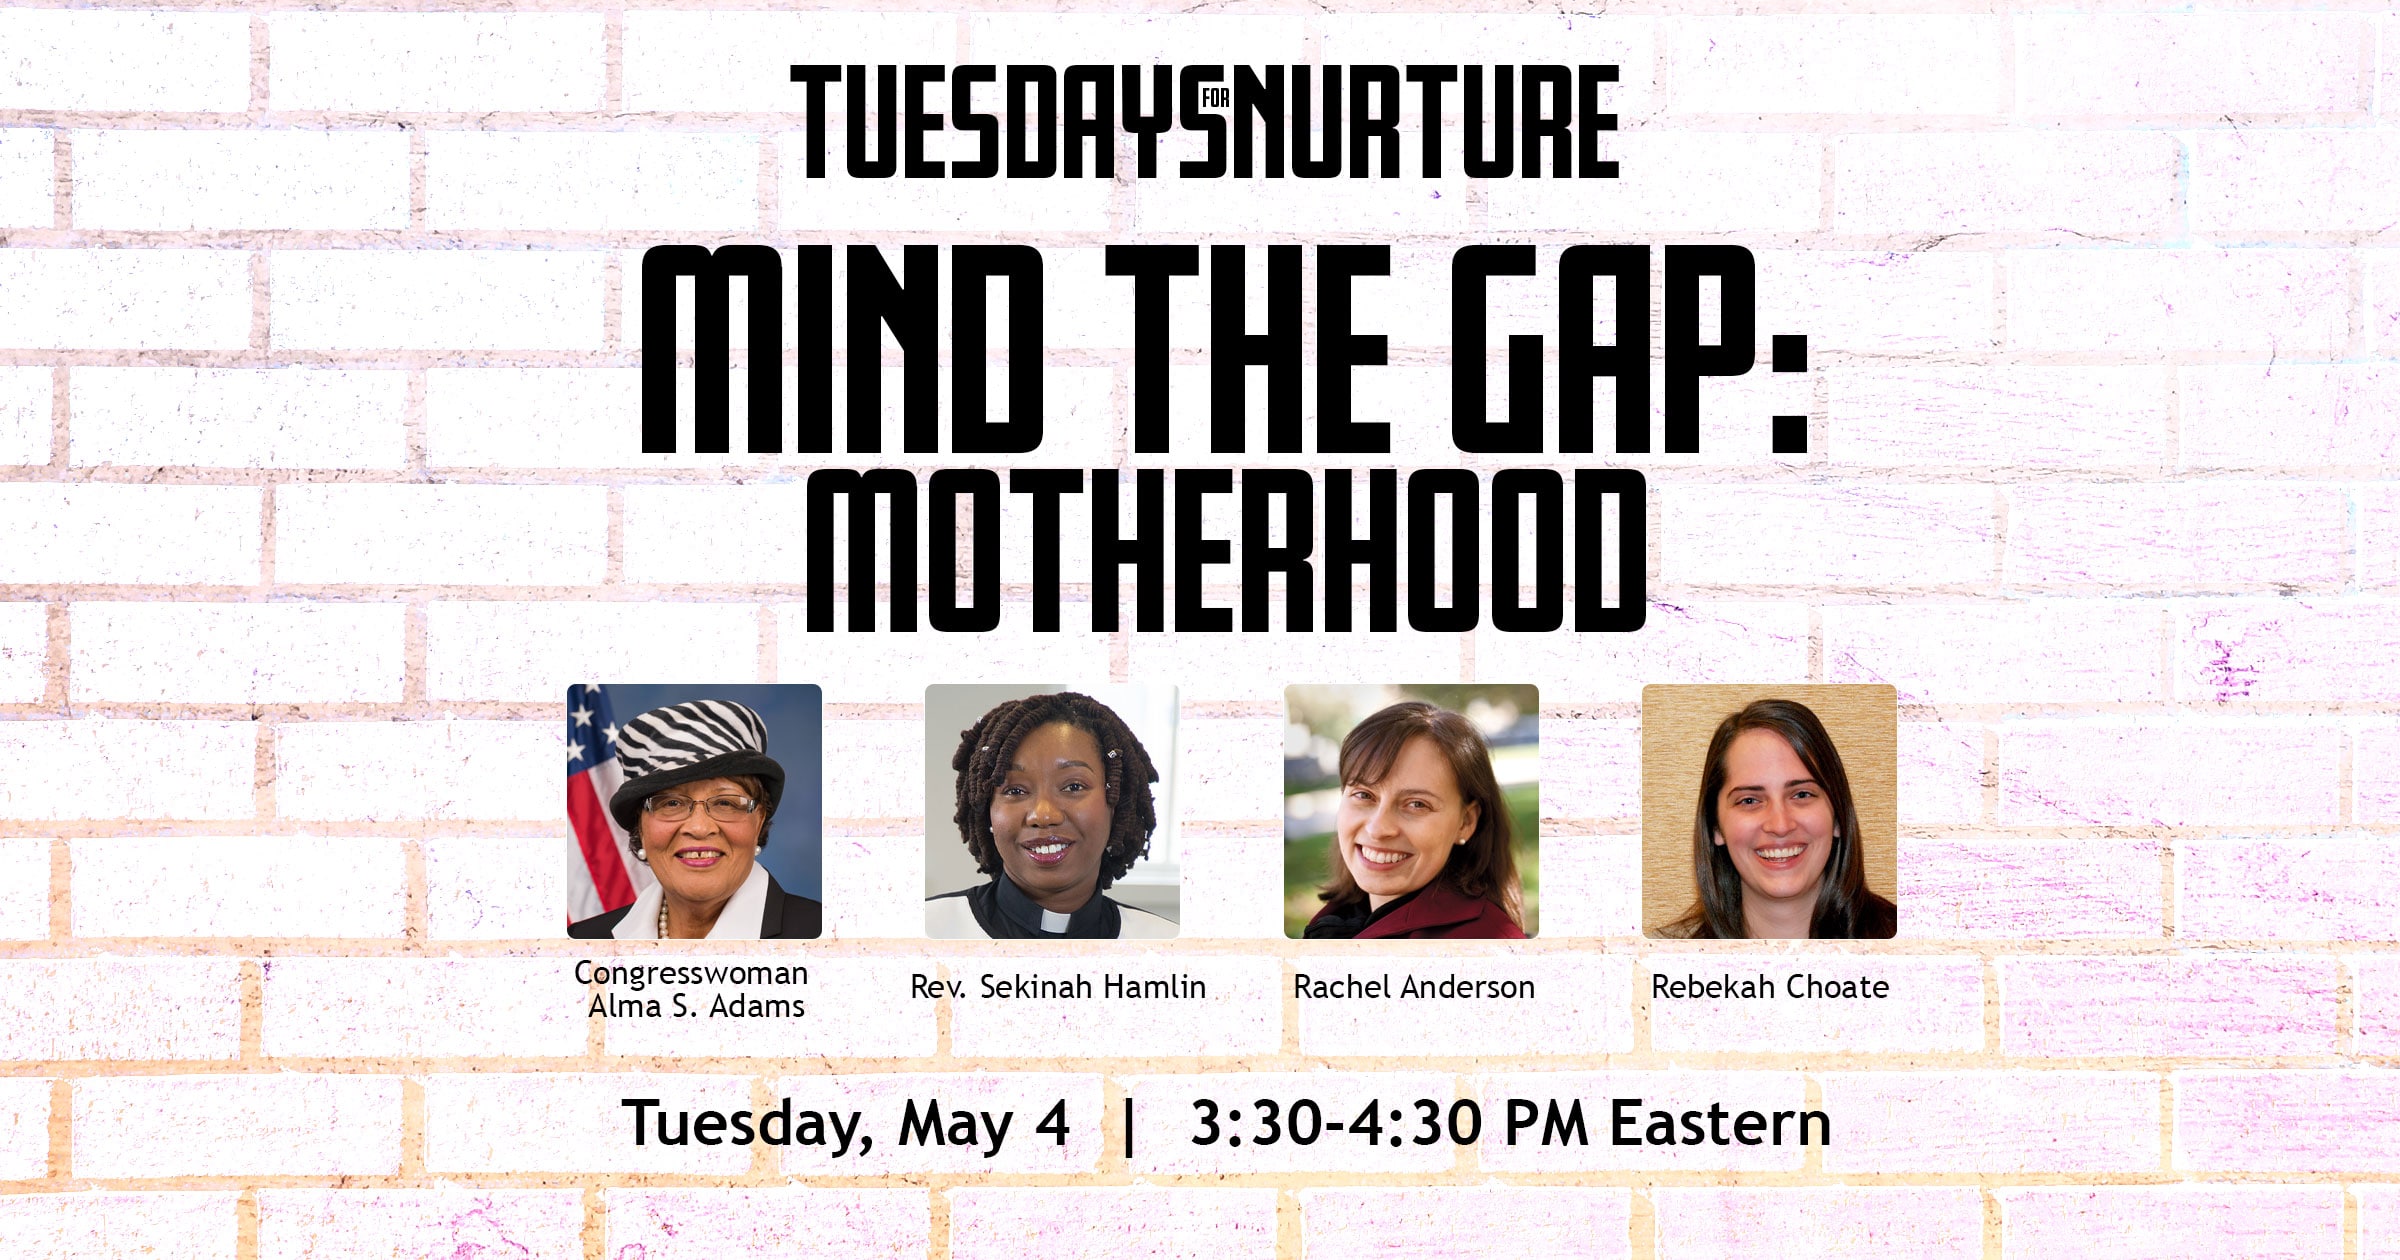 Tuesdays for Nurture- Mind the Gap: Motherhood. Headshots of Congresswoman Alma S. Adams, Rev. Sekinah Hamlin, Rachel Anderson, Rebeckah Choate. Tuesday, May 4. 3:30 - 4:30 PM Eastern.